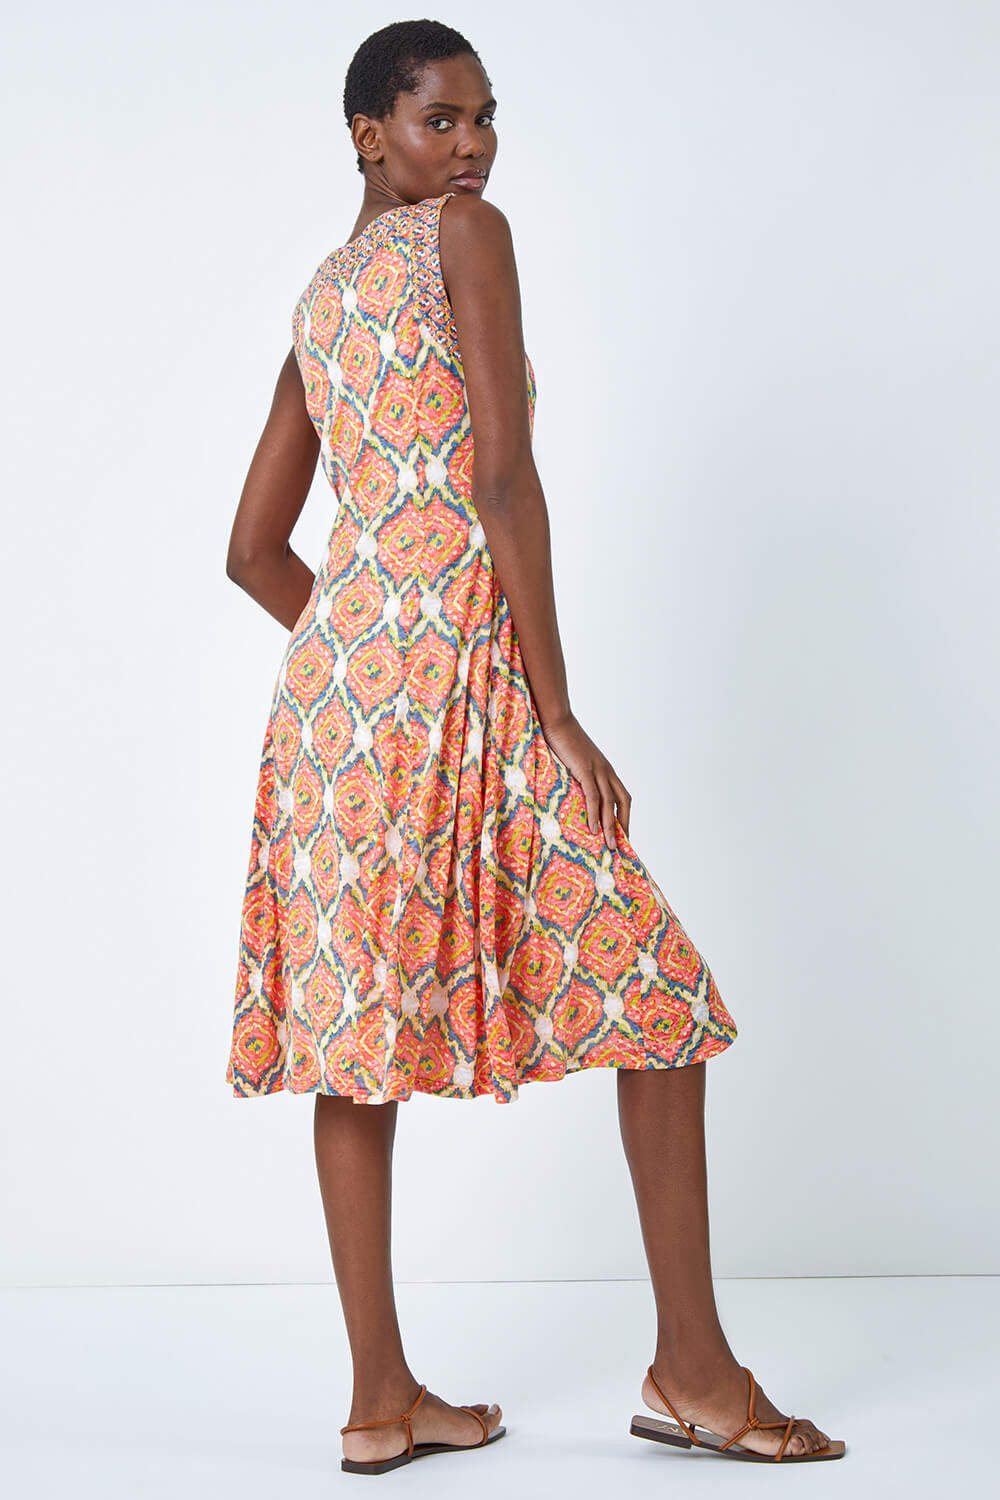 ORANGE Sleeveless Geometric Print Swing Dress, Image 3 of 5